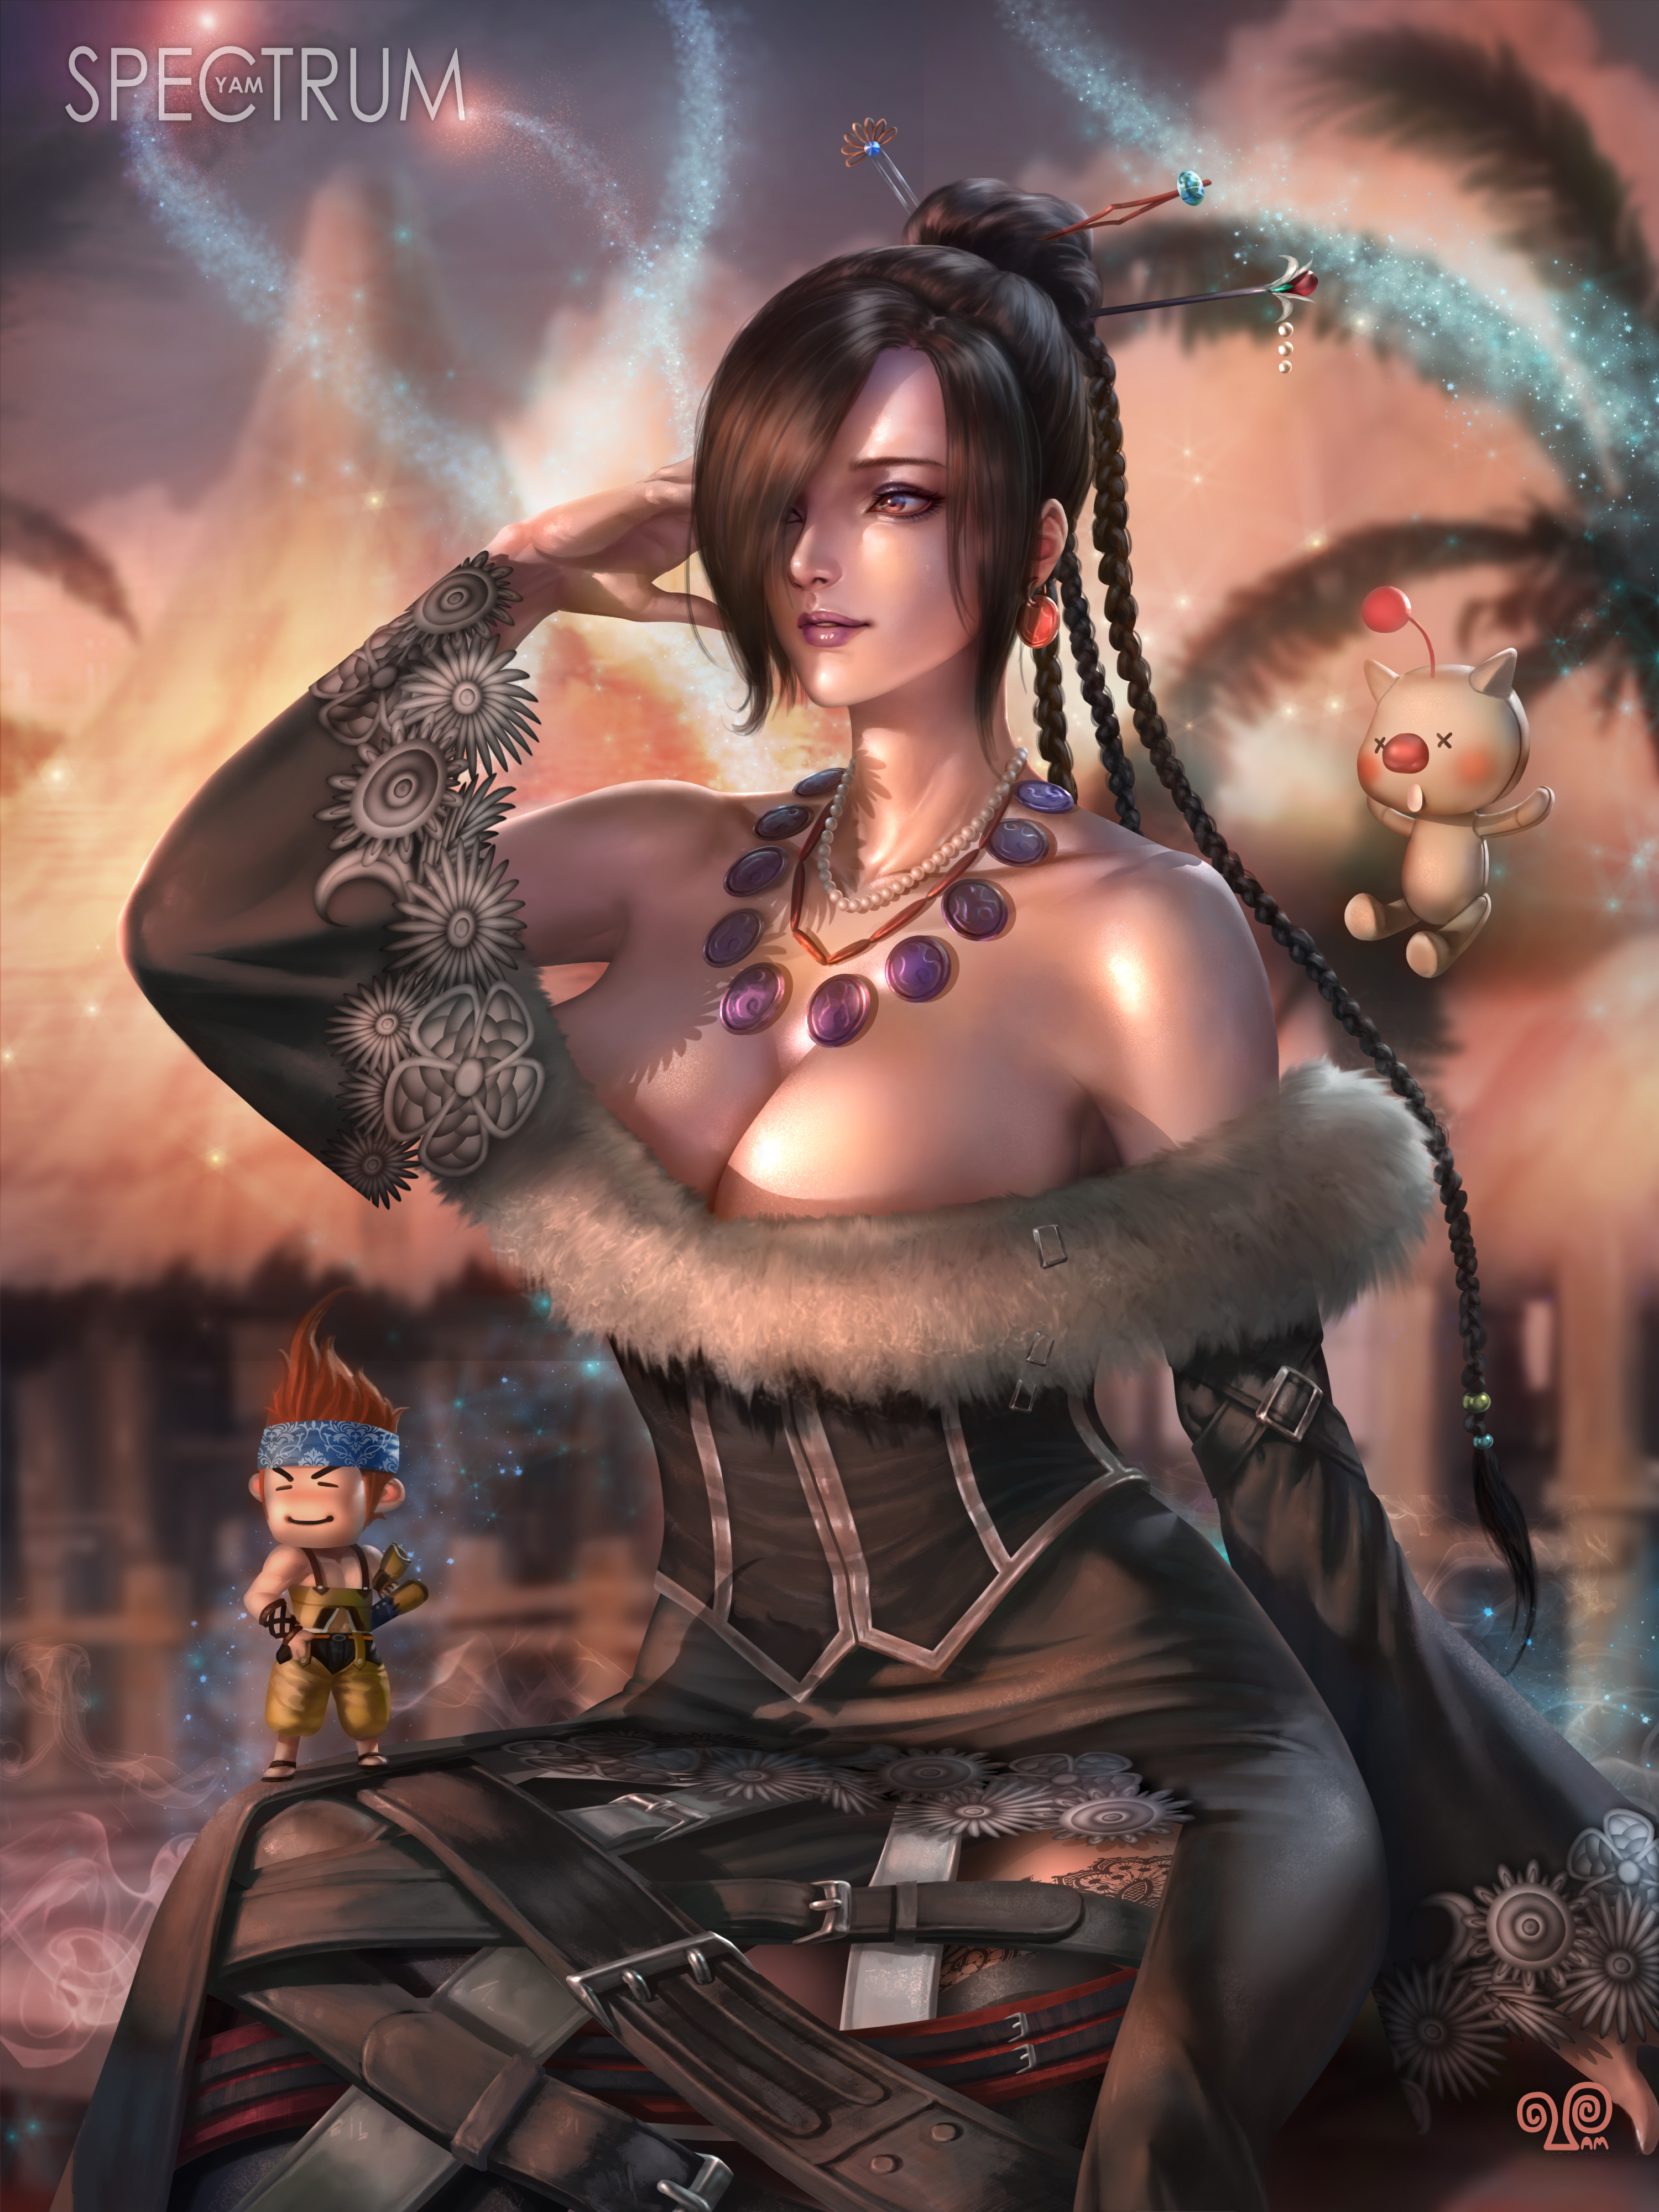 Lulu Final Fantasy X Final Fantasy Video Games Video Game Girls Video Game Characters 2D Artwork Dra 3000x4000